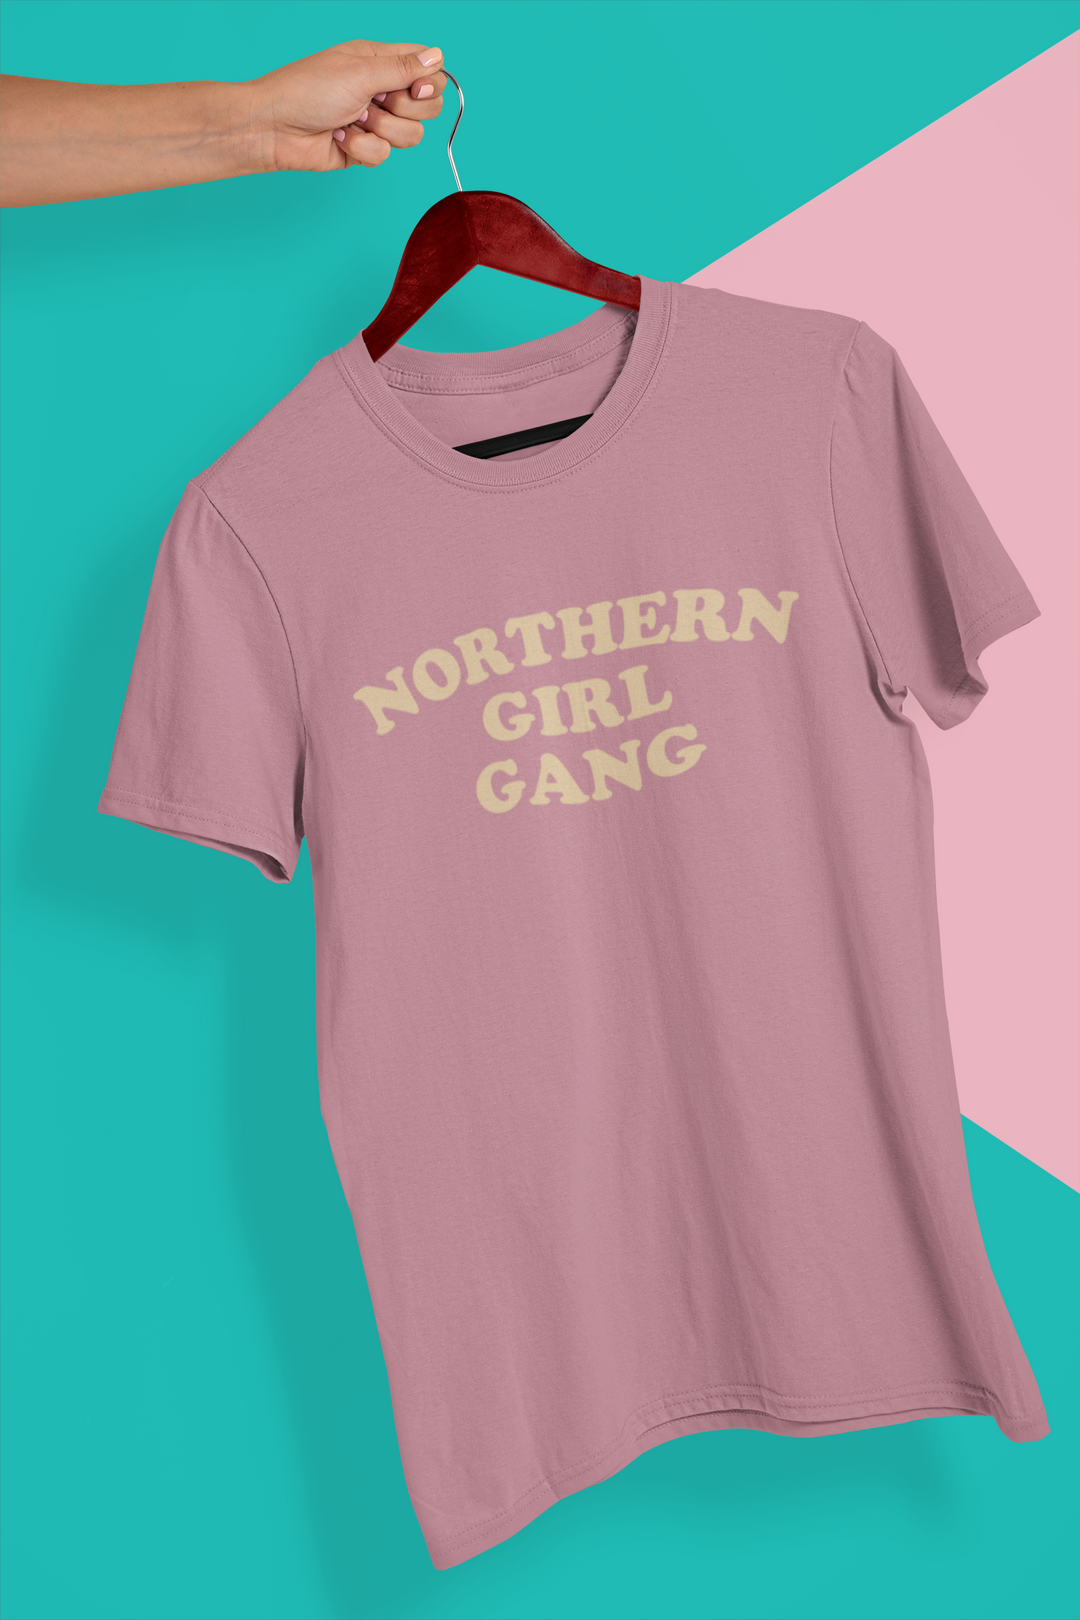 Northern Girl Gang T-Shirt - Limited Edition